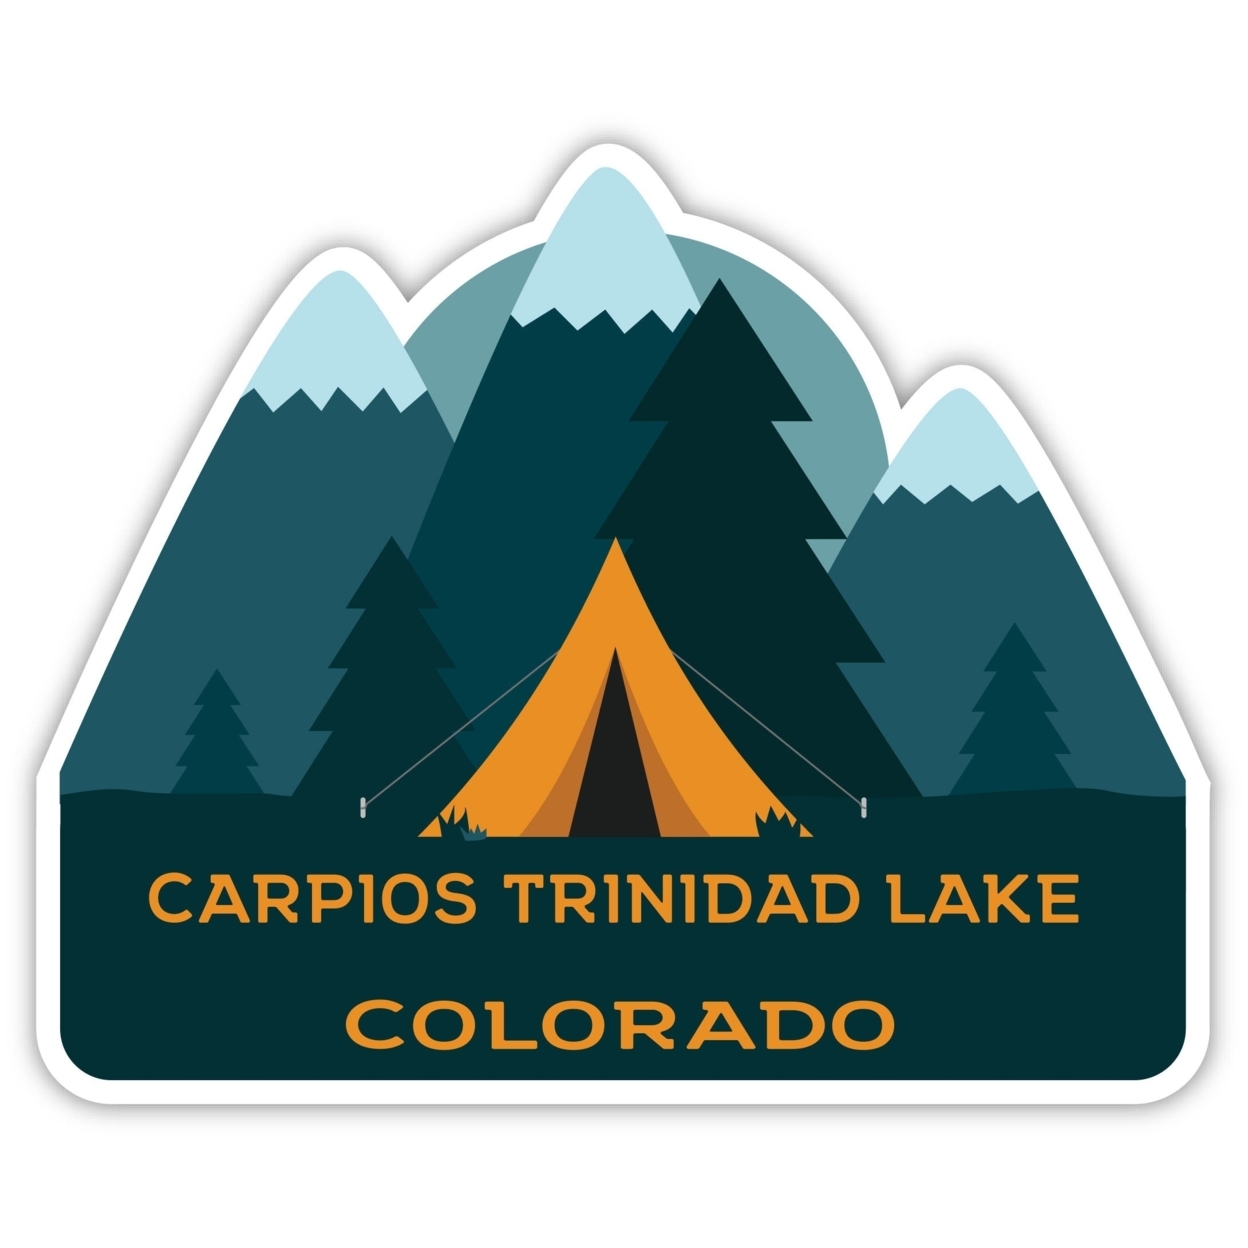 Carpios Trinidad Lake Colorado Souvenir Decorative Stickers (Choose Theme And Size) - 4-Pack, 4-Inch, Tent